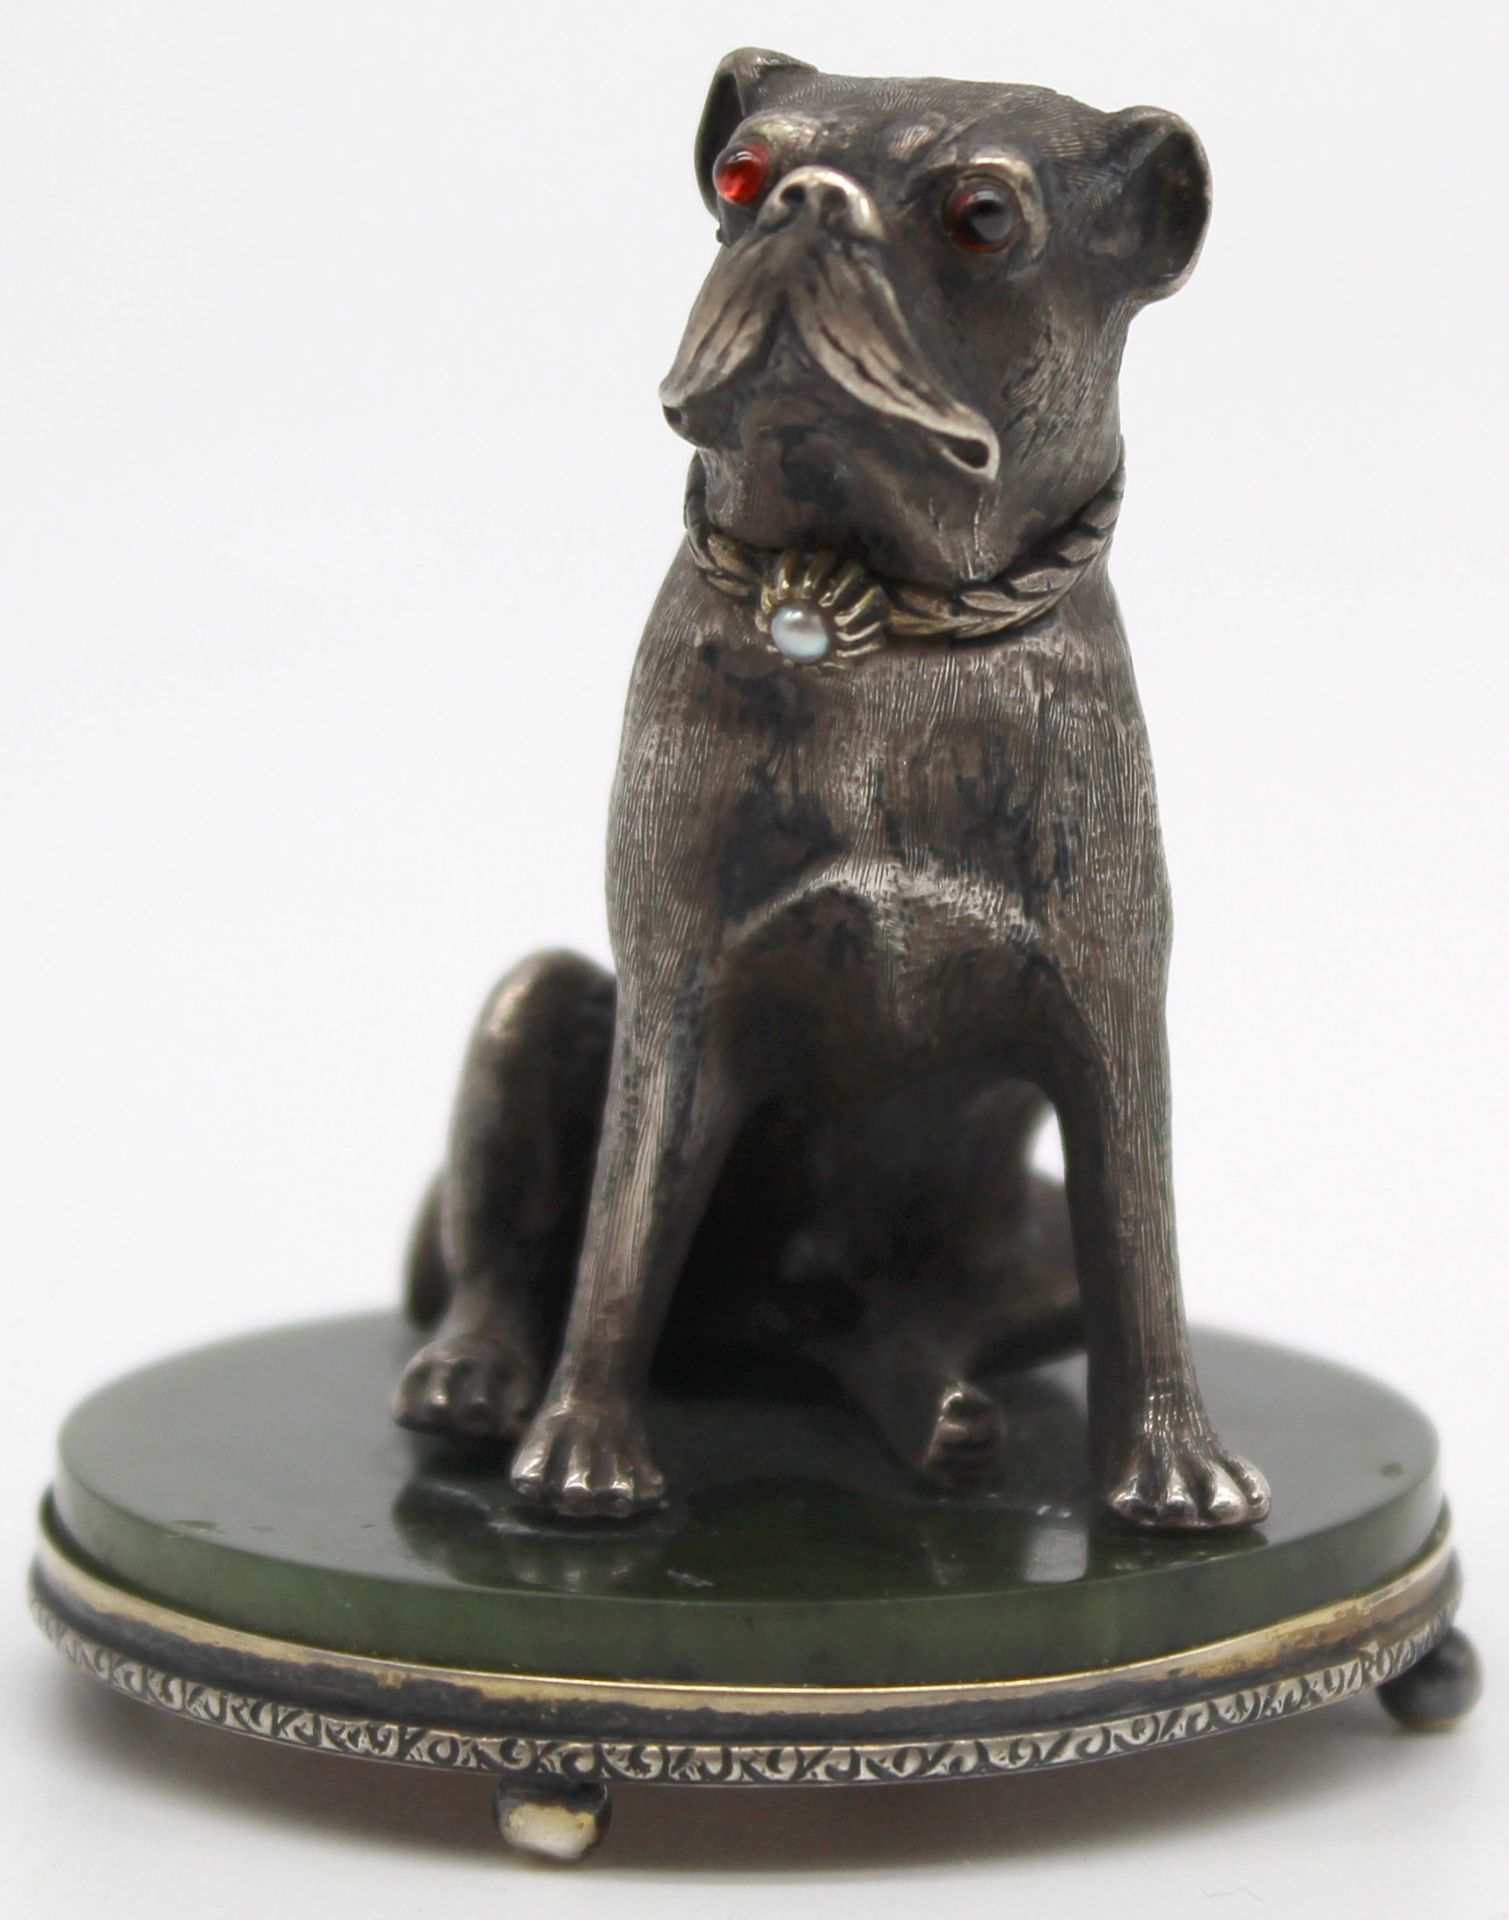 Silver 88, Faberge, H. Wigström. Russia around 1910. Pug, bulldog? - Image 3 of 10